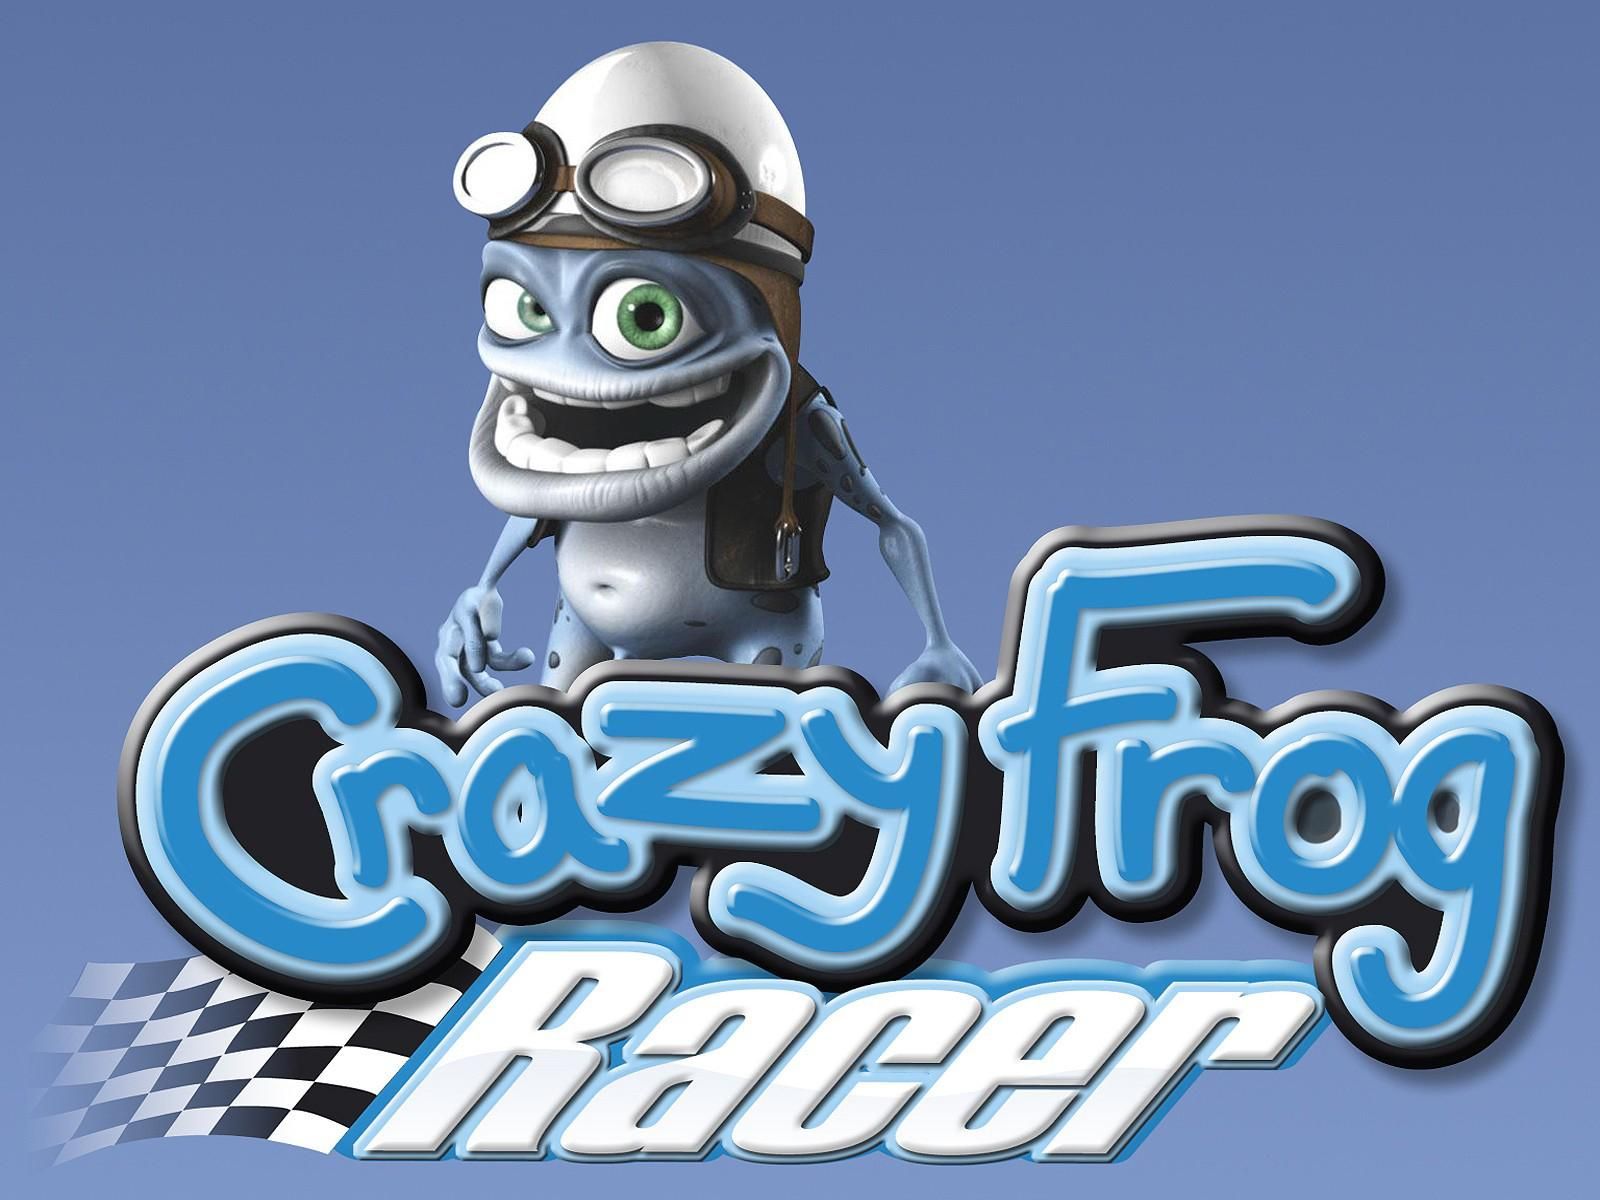 Wallpapers Crazy Frog Racer Games Image Download